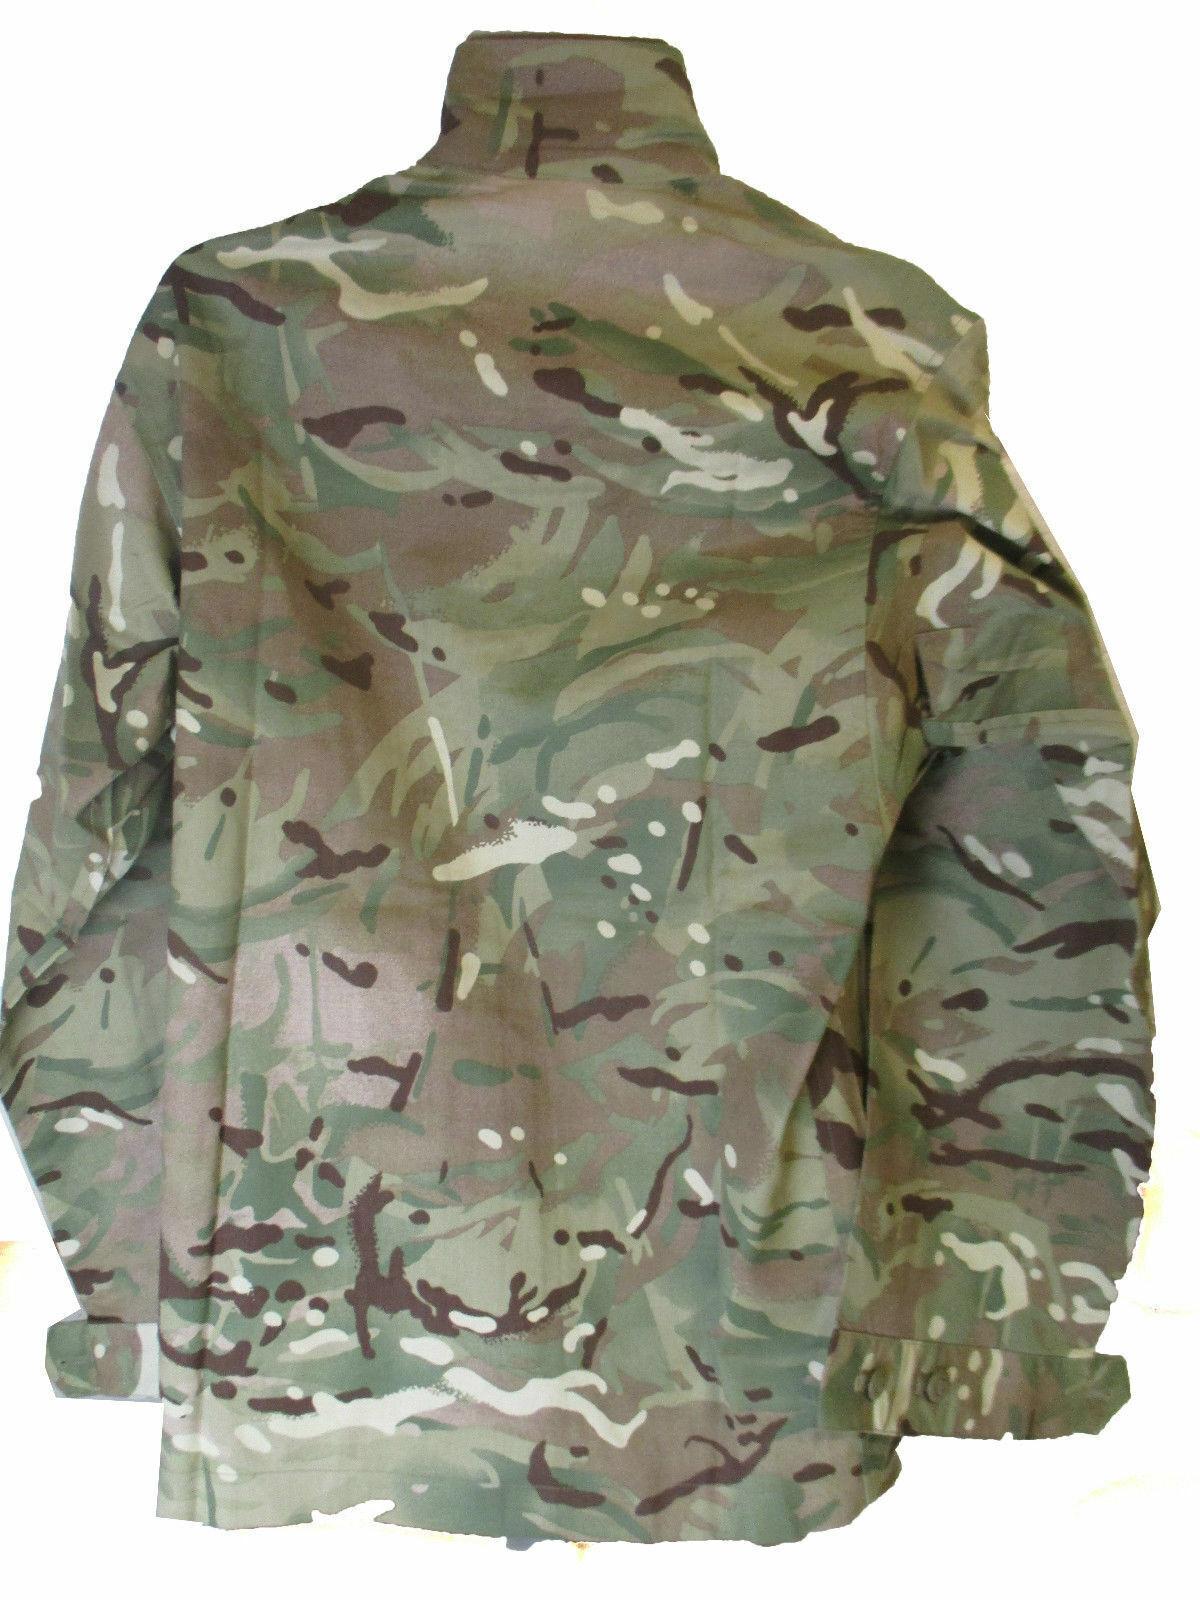 British Army MTP Multicam Warm Weather Jacket Used